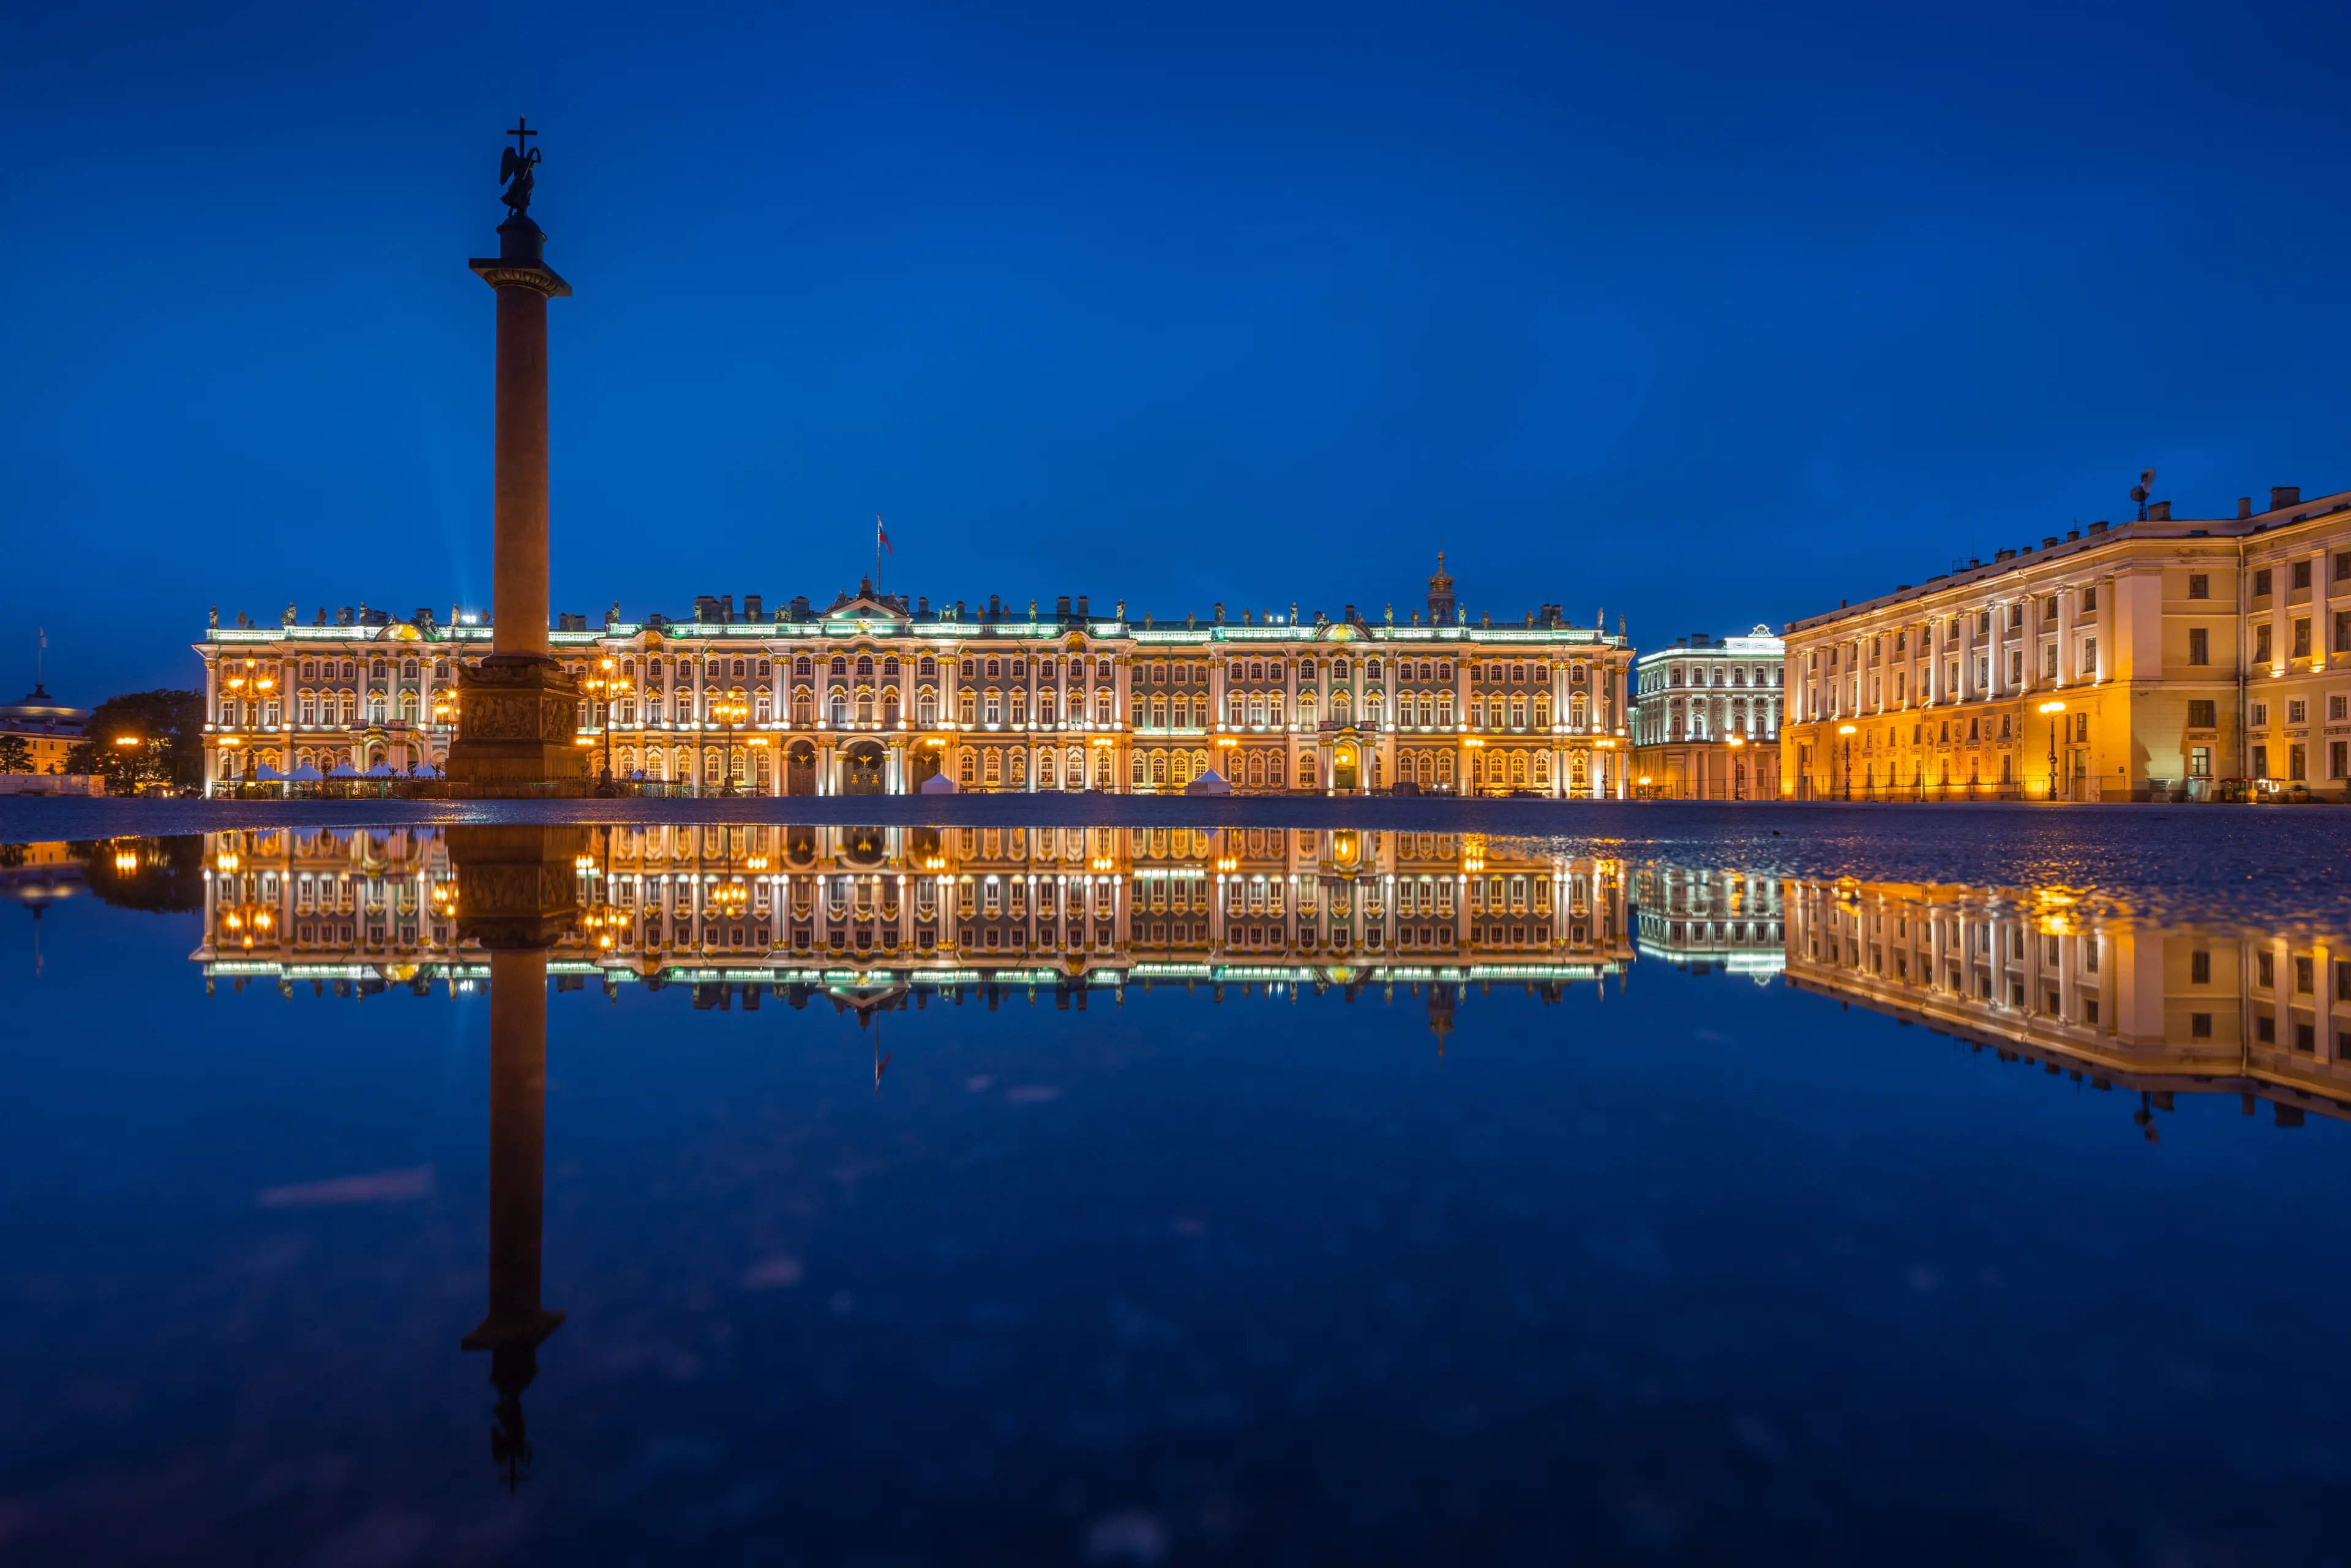 Hermitage museum (Winter Palace) on Palace square